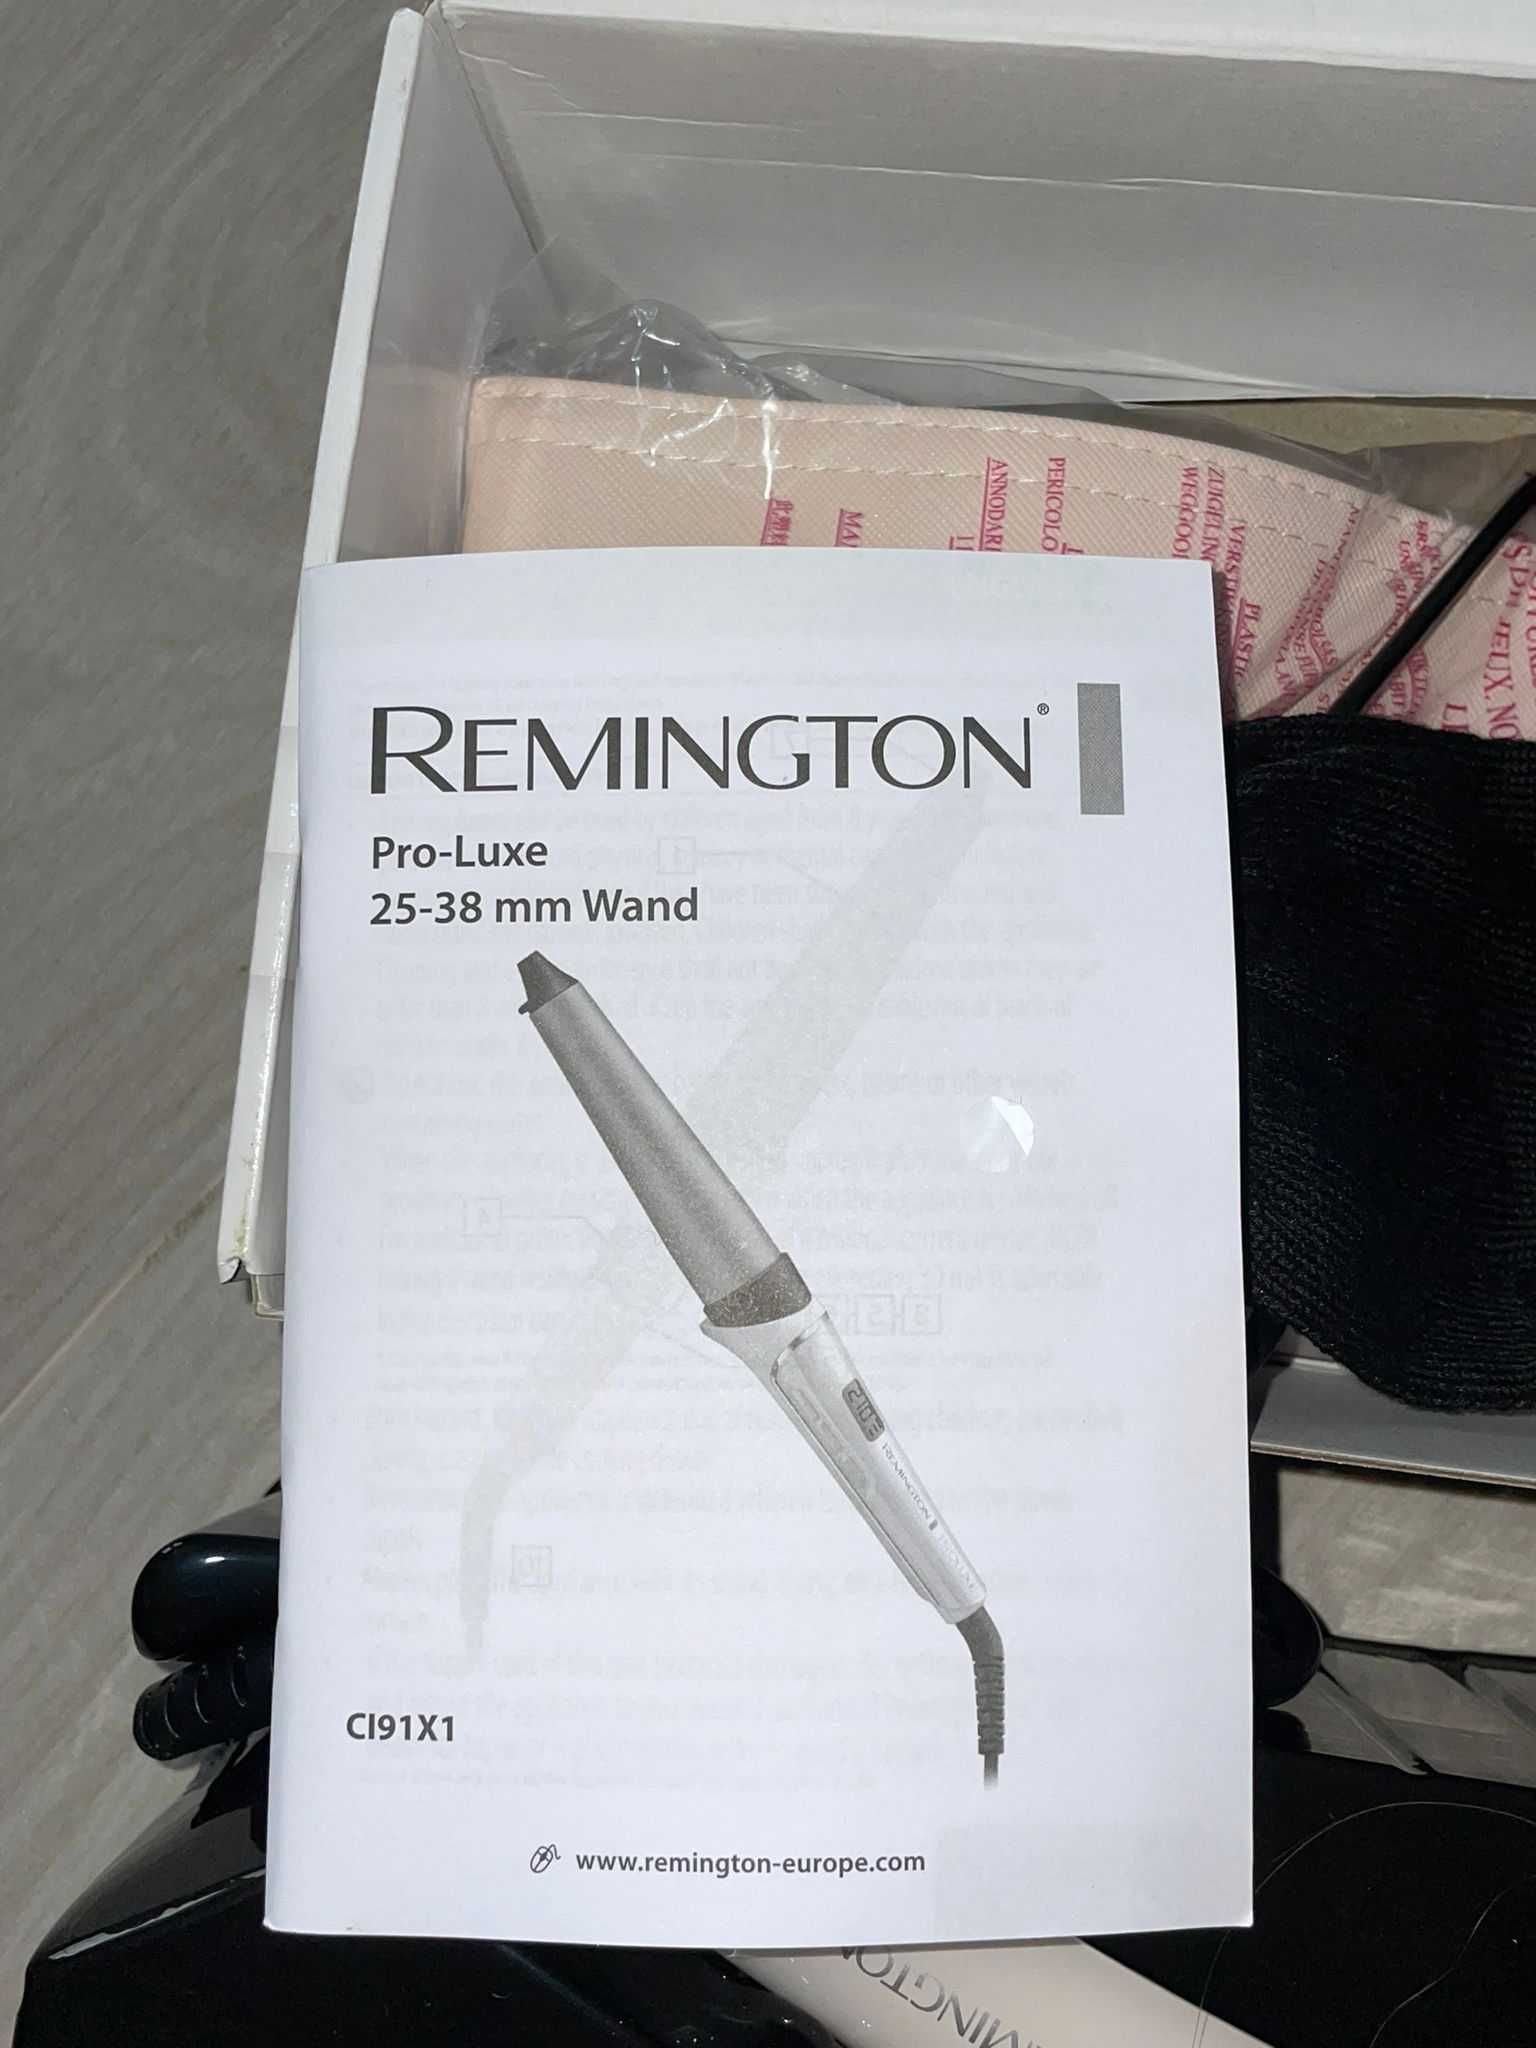 ONDULATOR - Remington professional PROLUXE